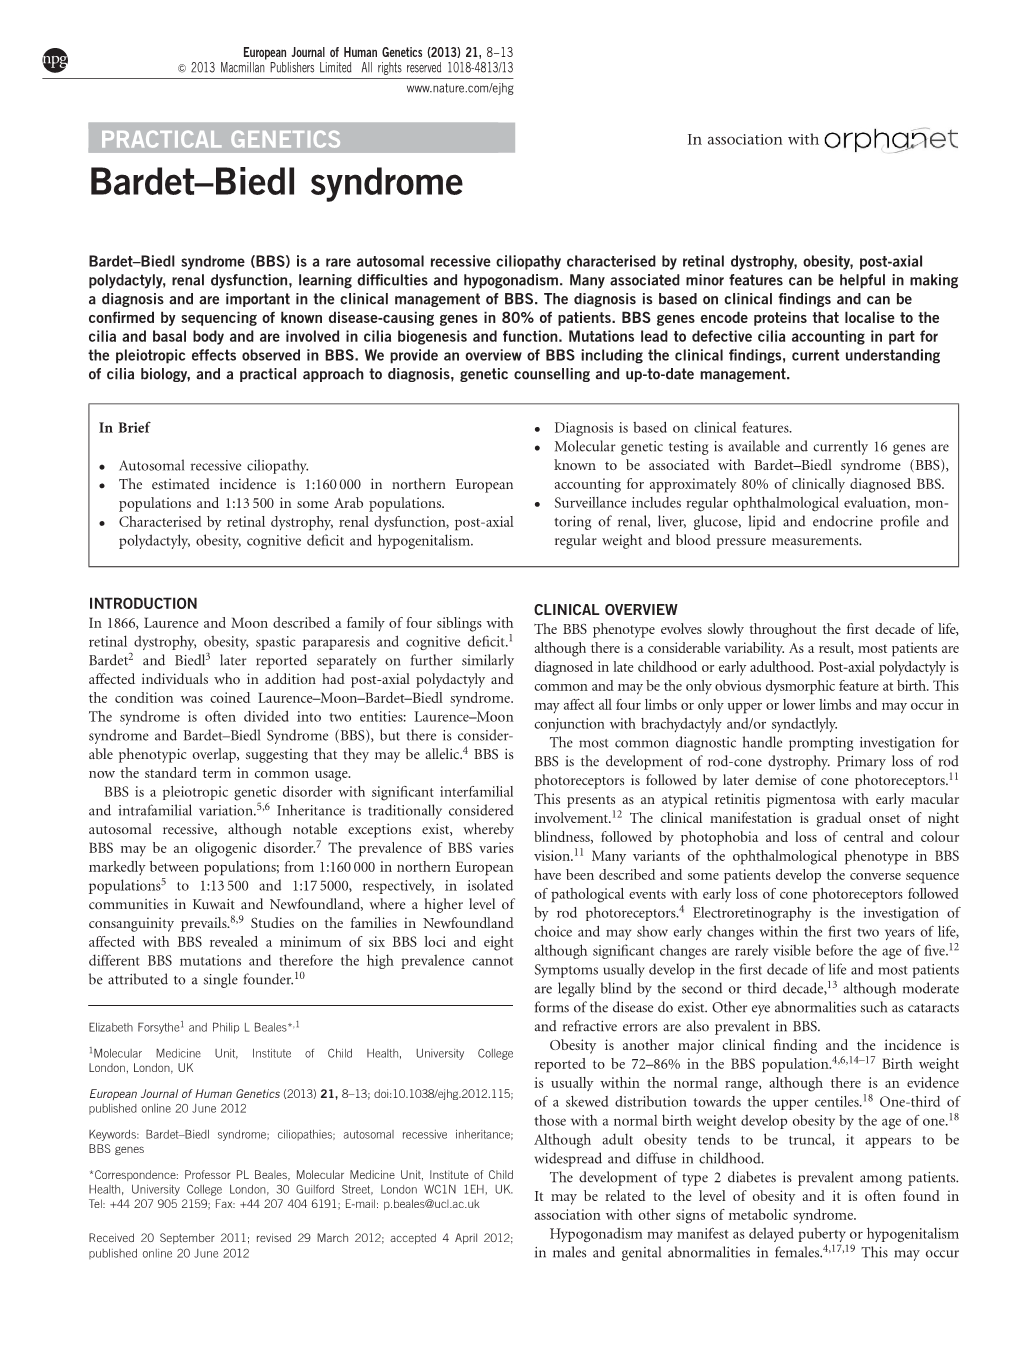 Biedl Syndrome